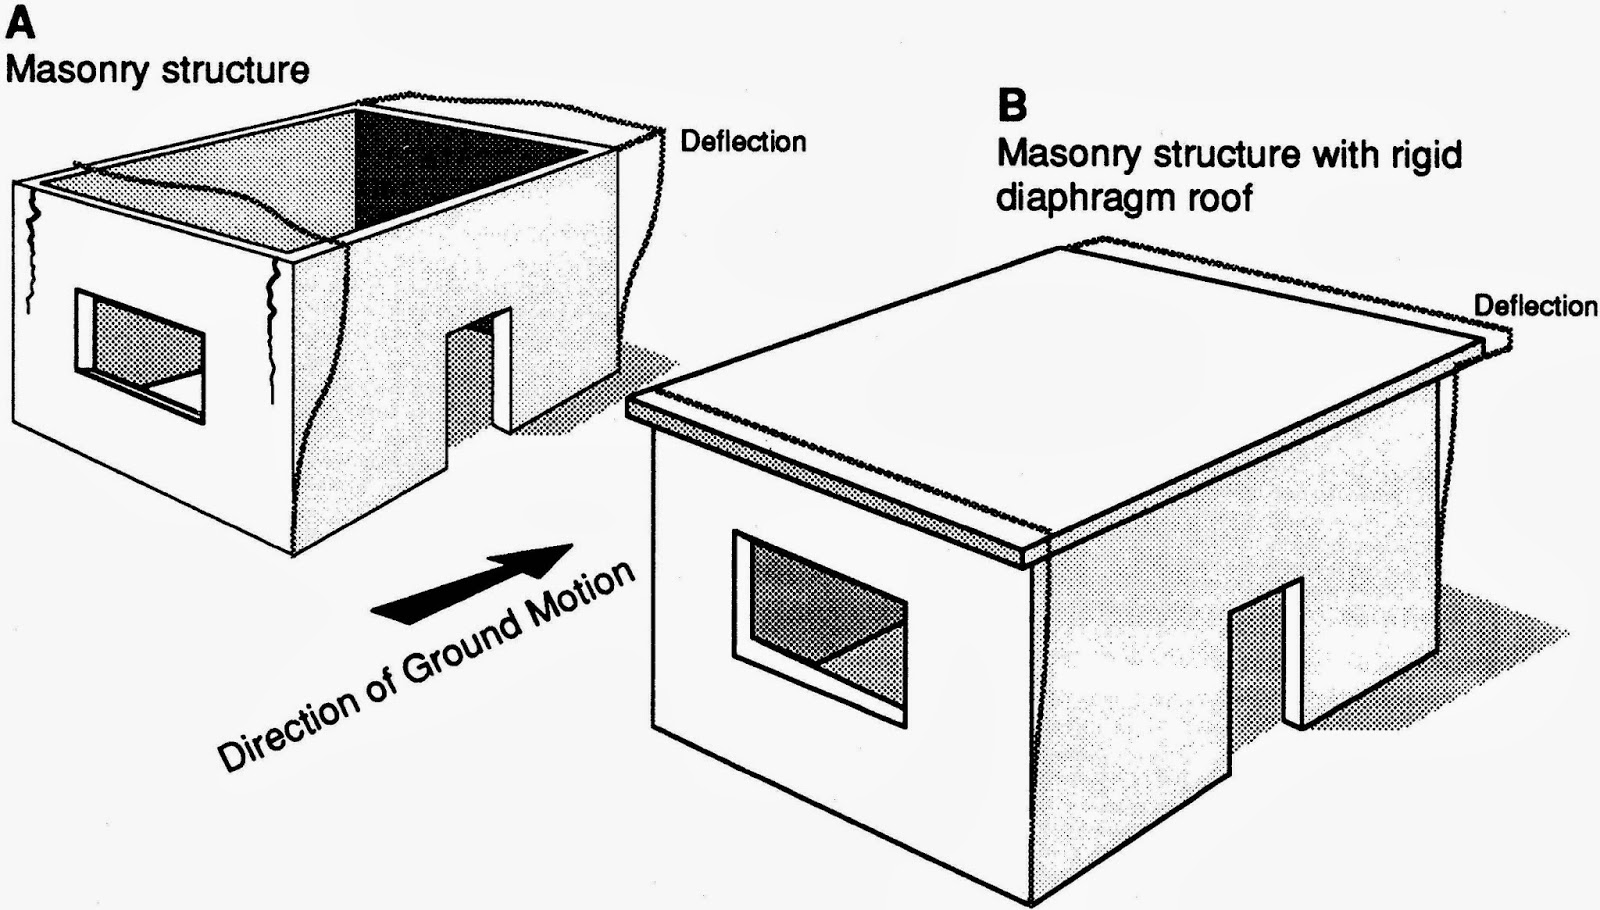 Figure 1: Response of single-storey masonry building to earthquake ground shaking